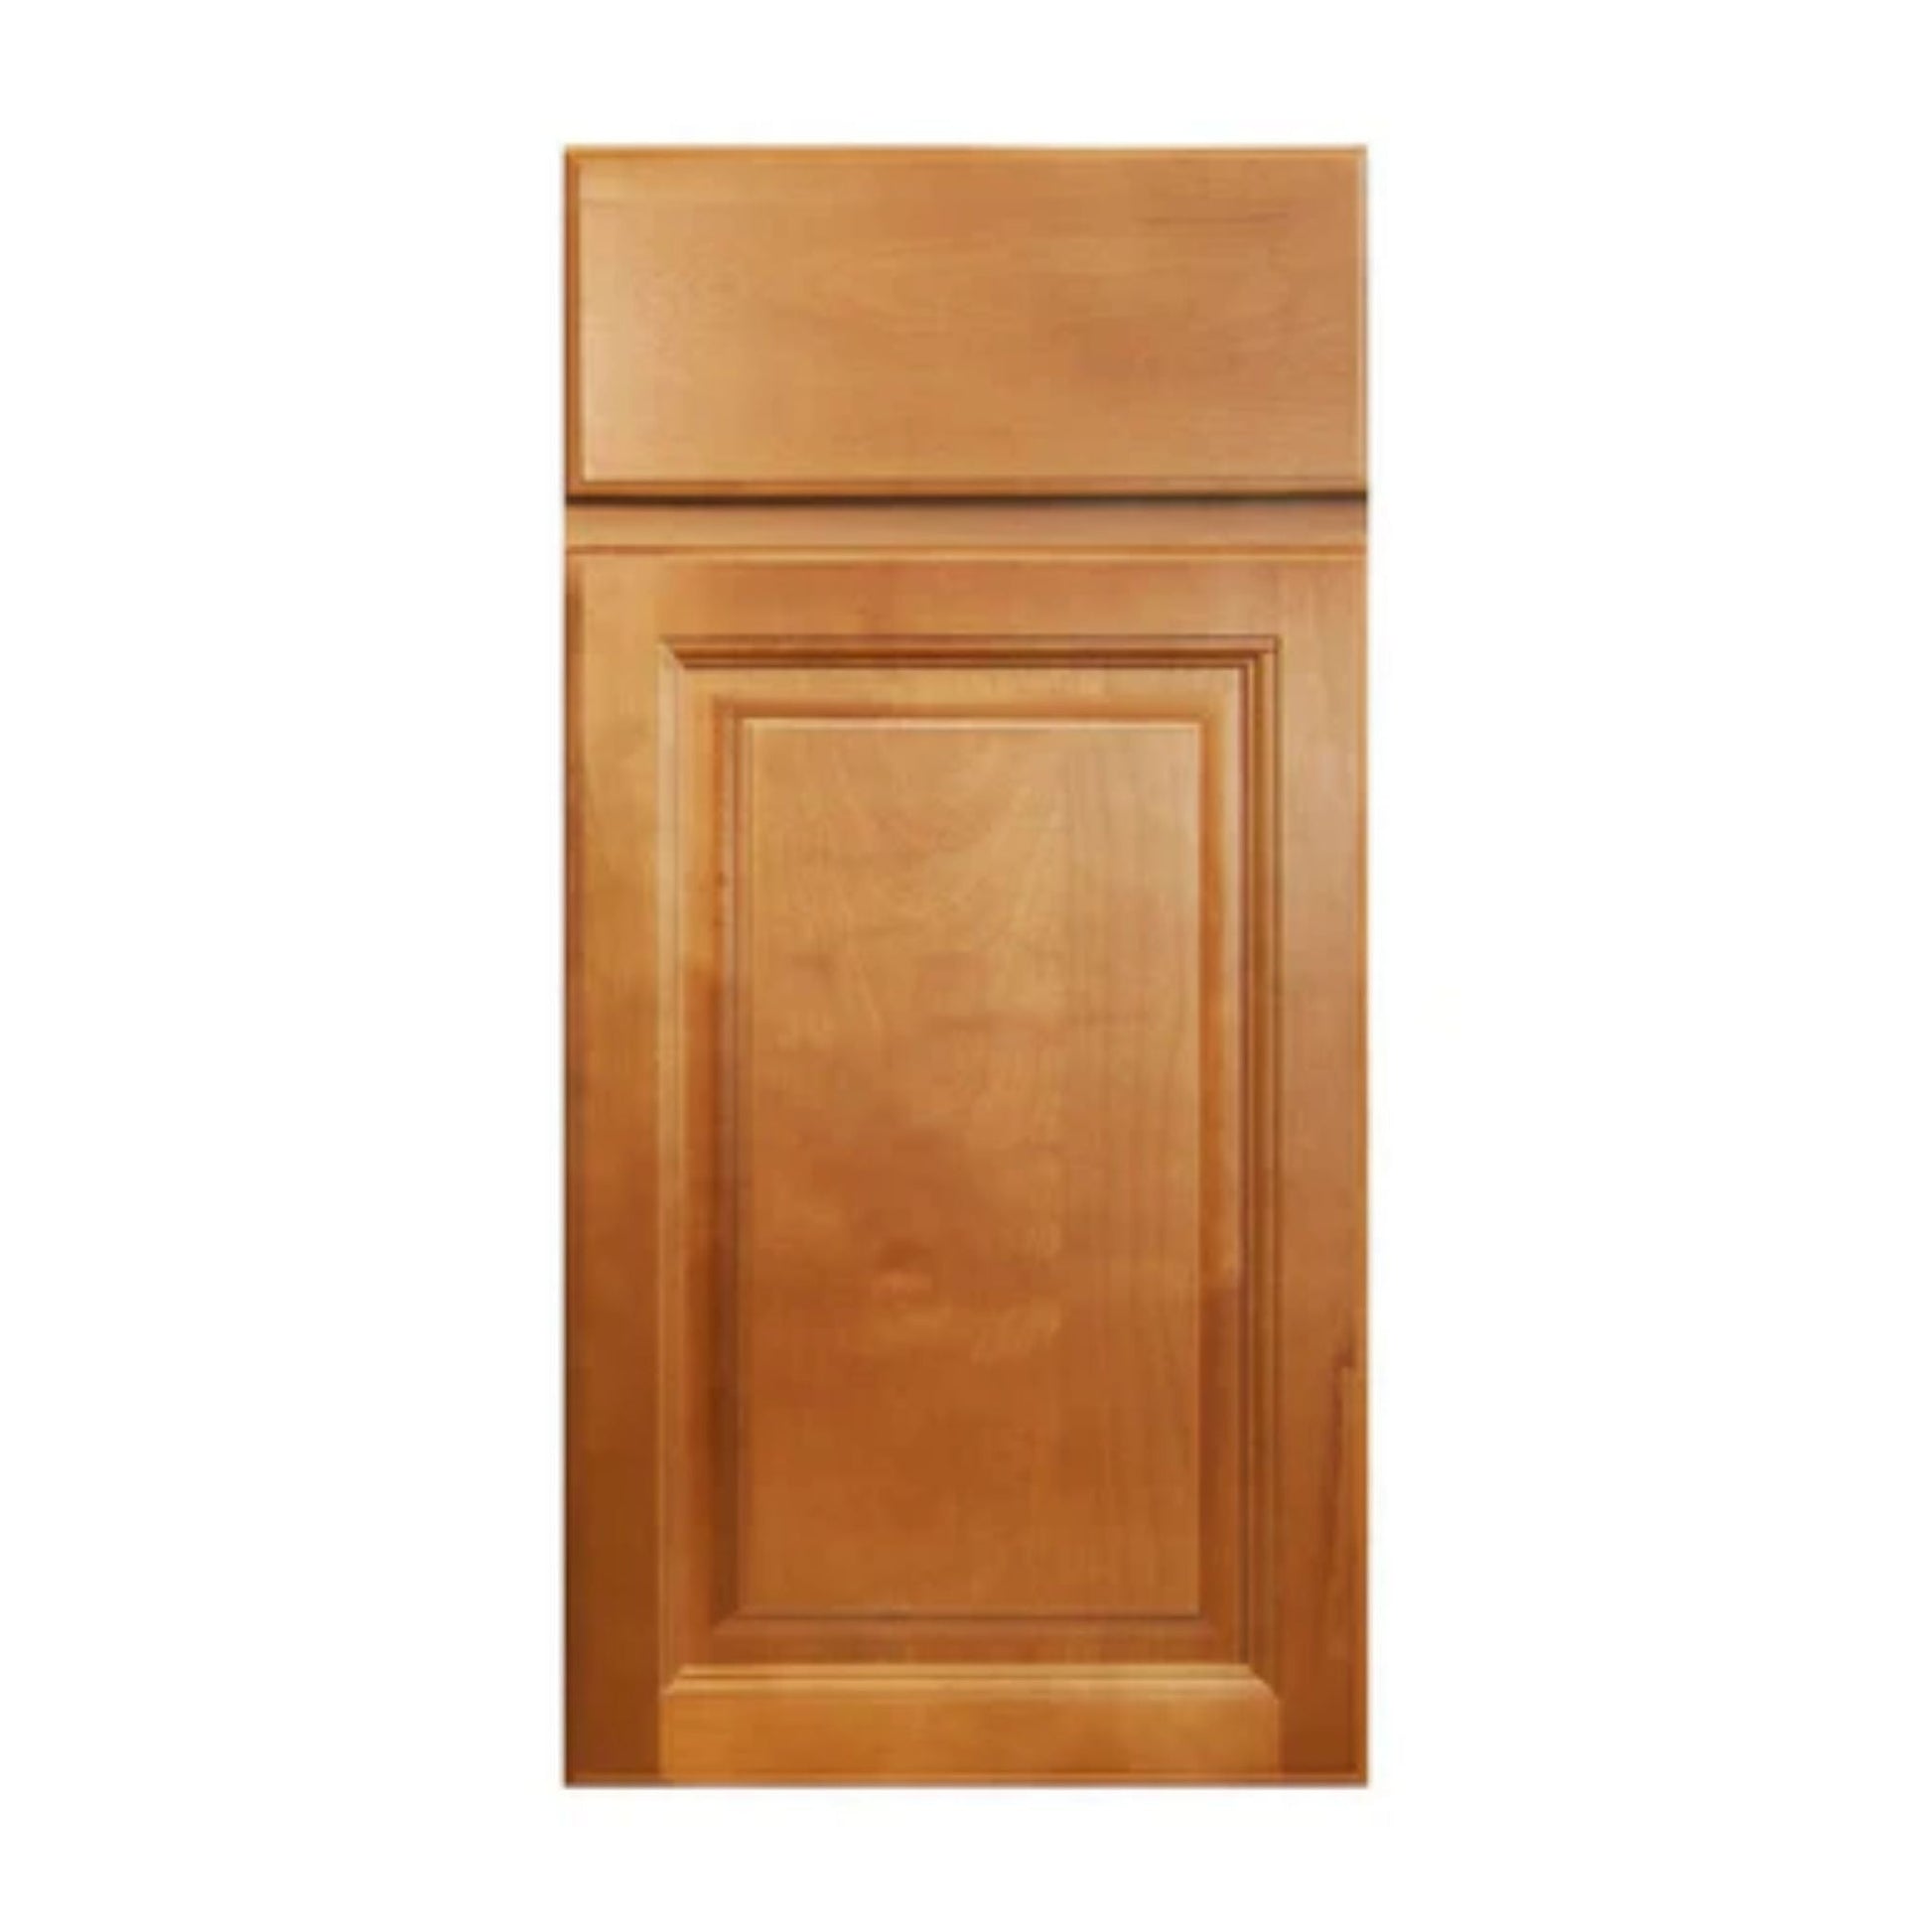 LessCare 24" x 24" x 12" Richmond Wall Kitchen Cabinet - W2424